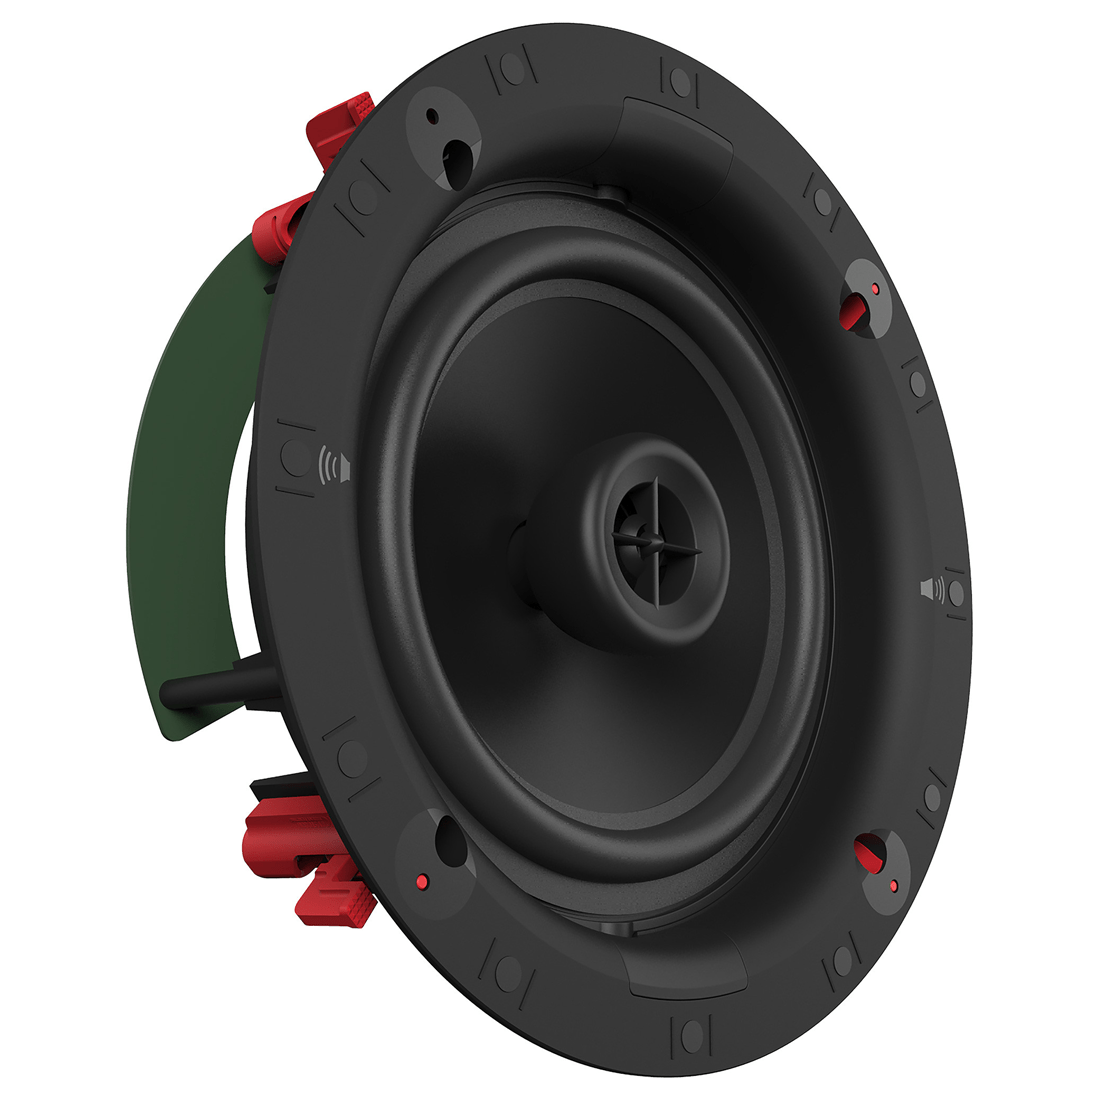 Klipsch DS-180CDT In-Ceiling Speaker – Each